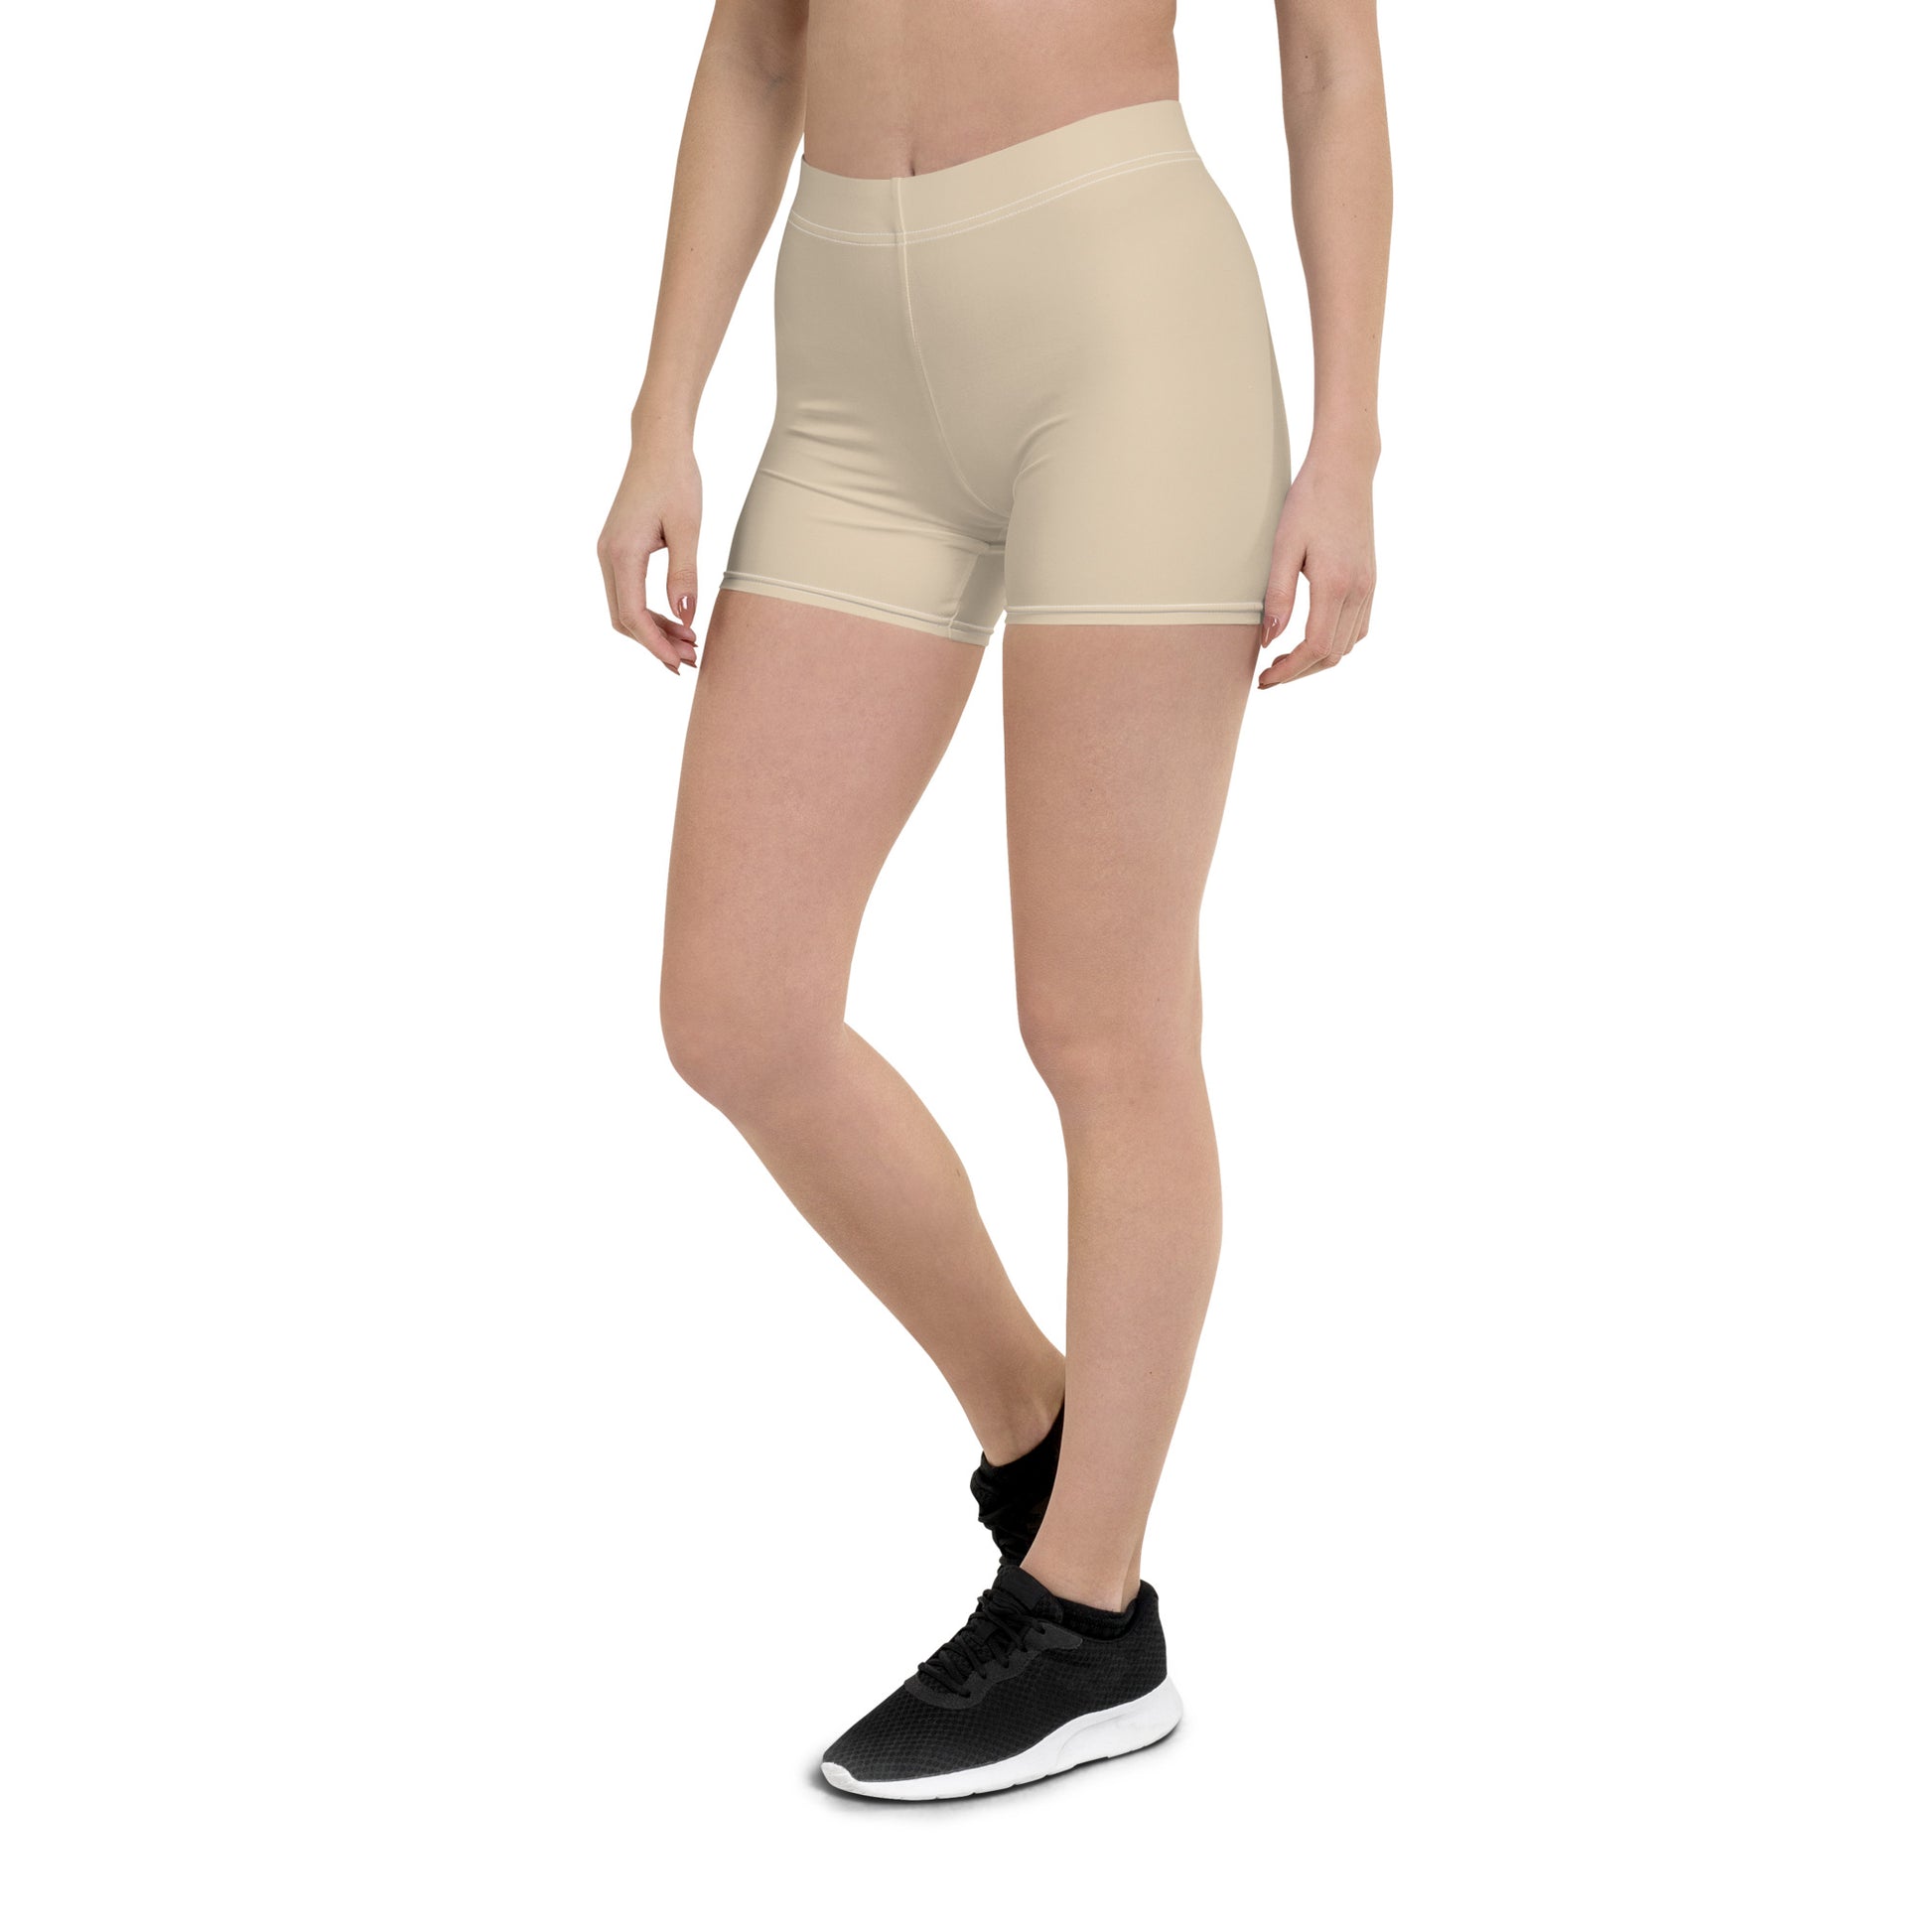 Humble Sportswear women's casual Color Match neutral brown bike shorts 